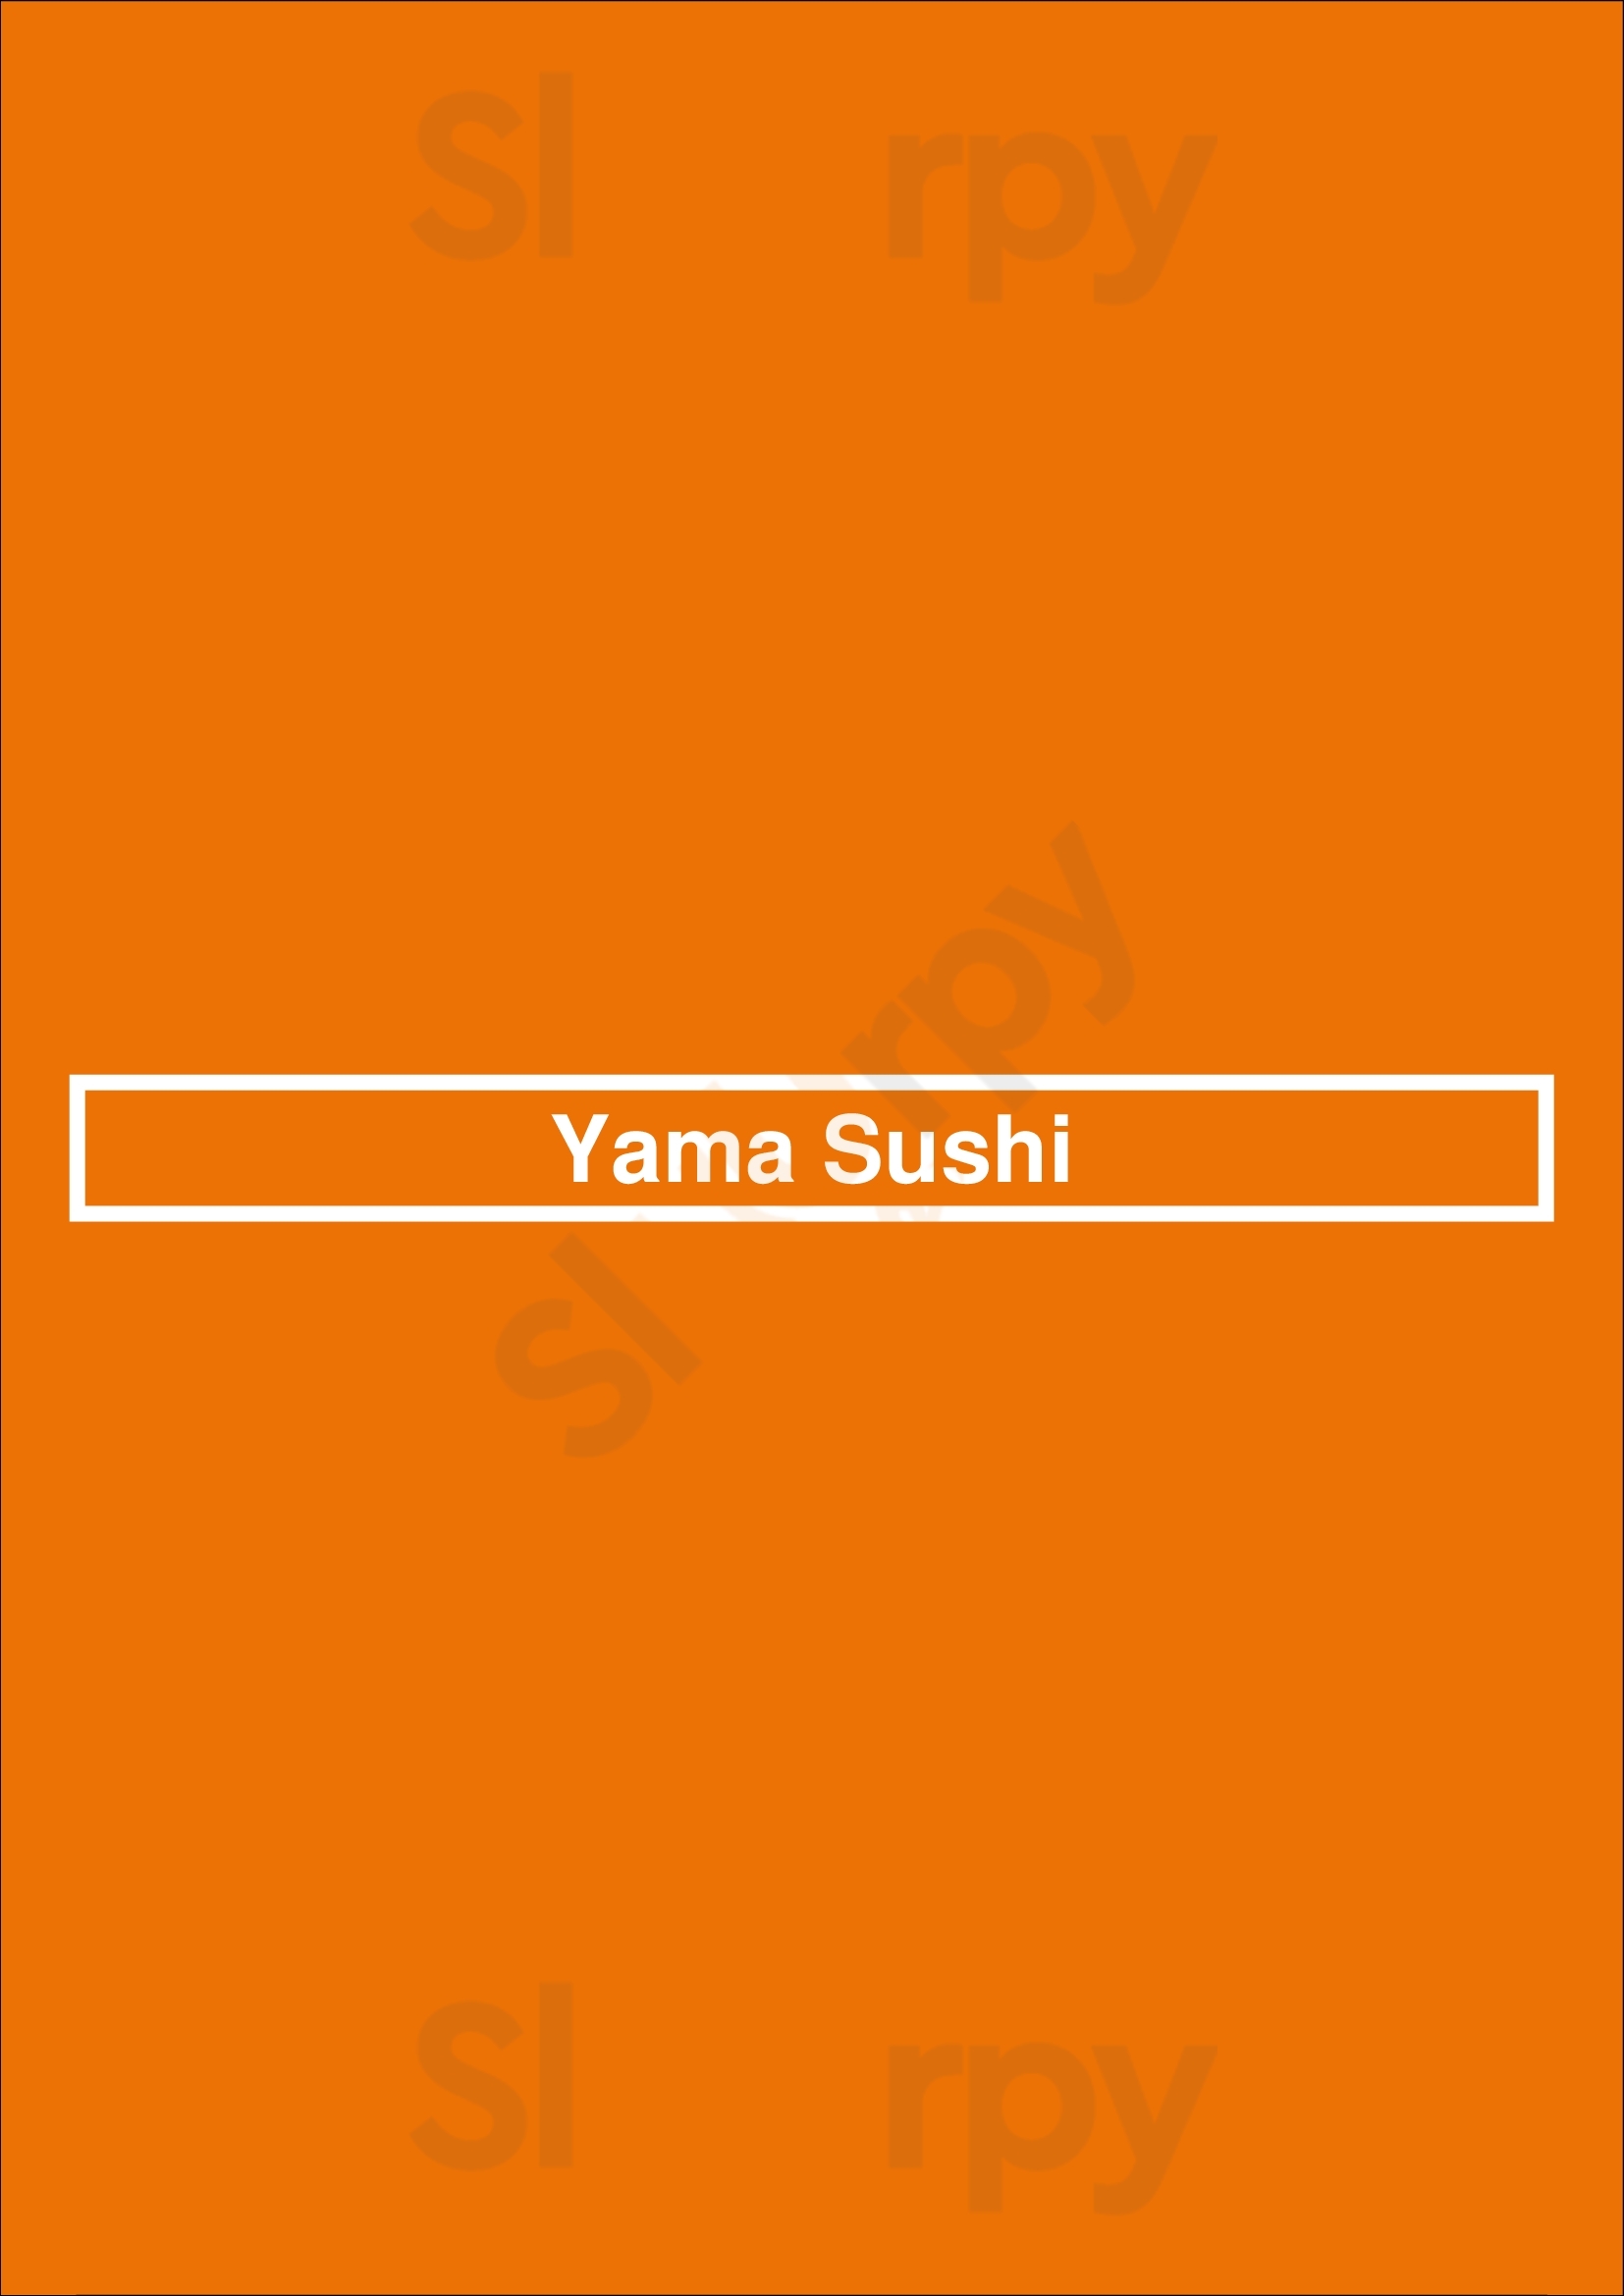 Yama Sushi Nice Menu - 1